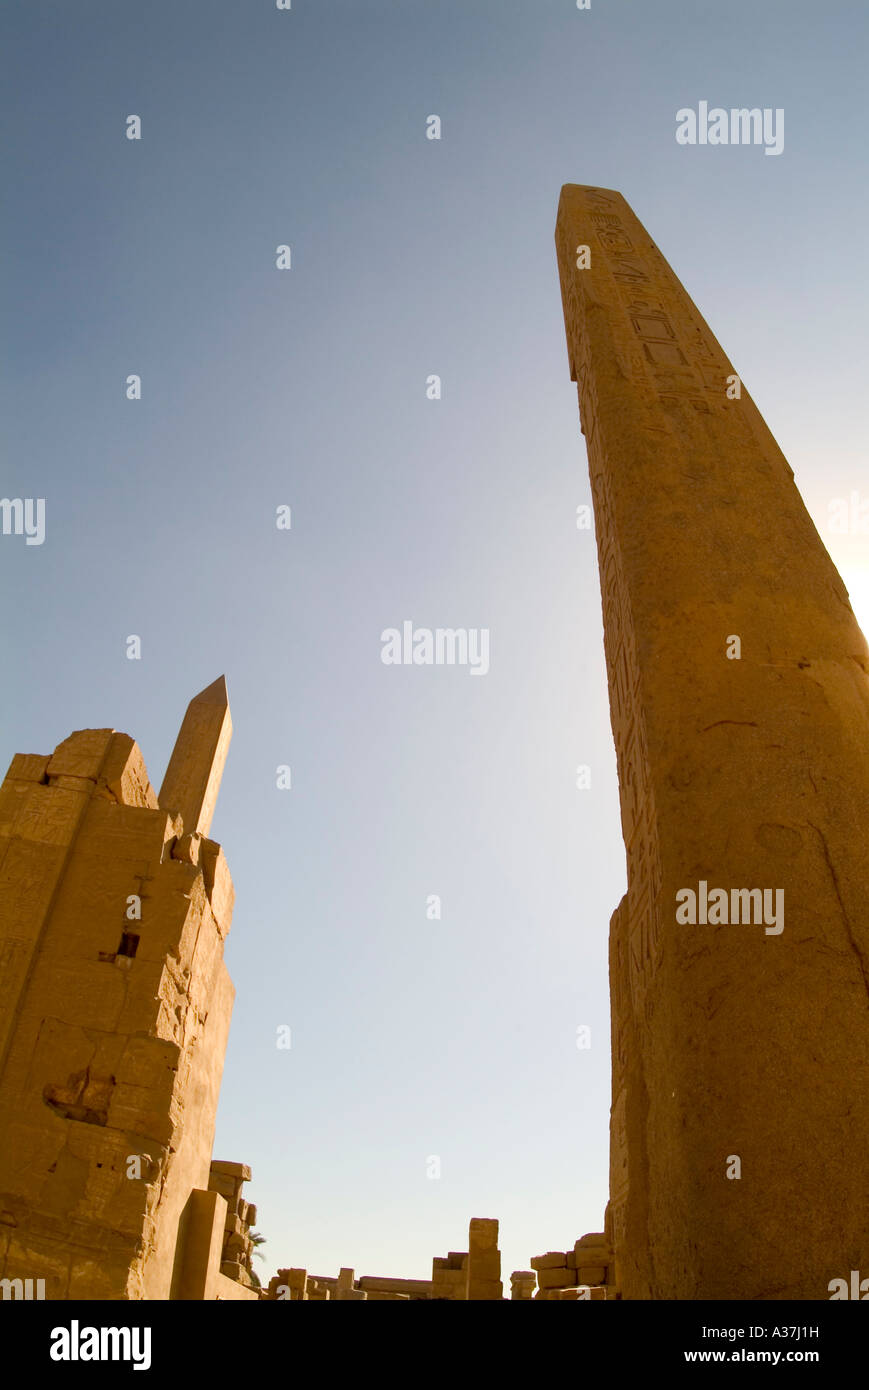 Tempio di Karnak due obelischi all'interno del terzo pilone Karnak Egitto Nord Africa Foto Stock